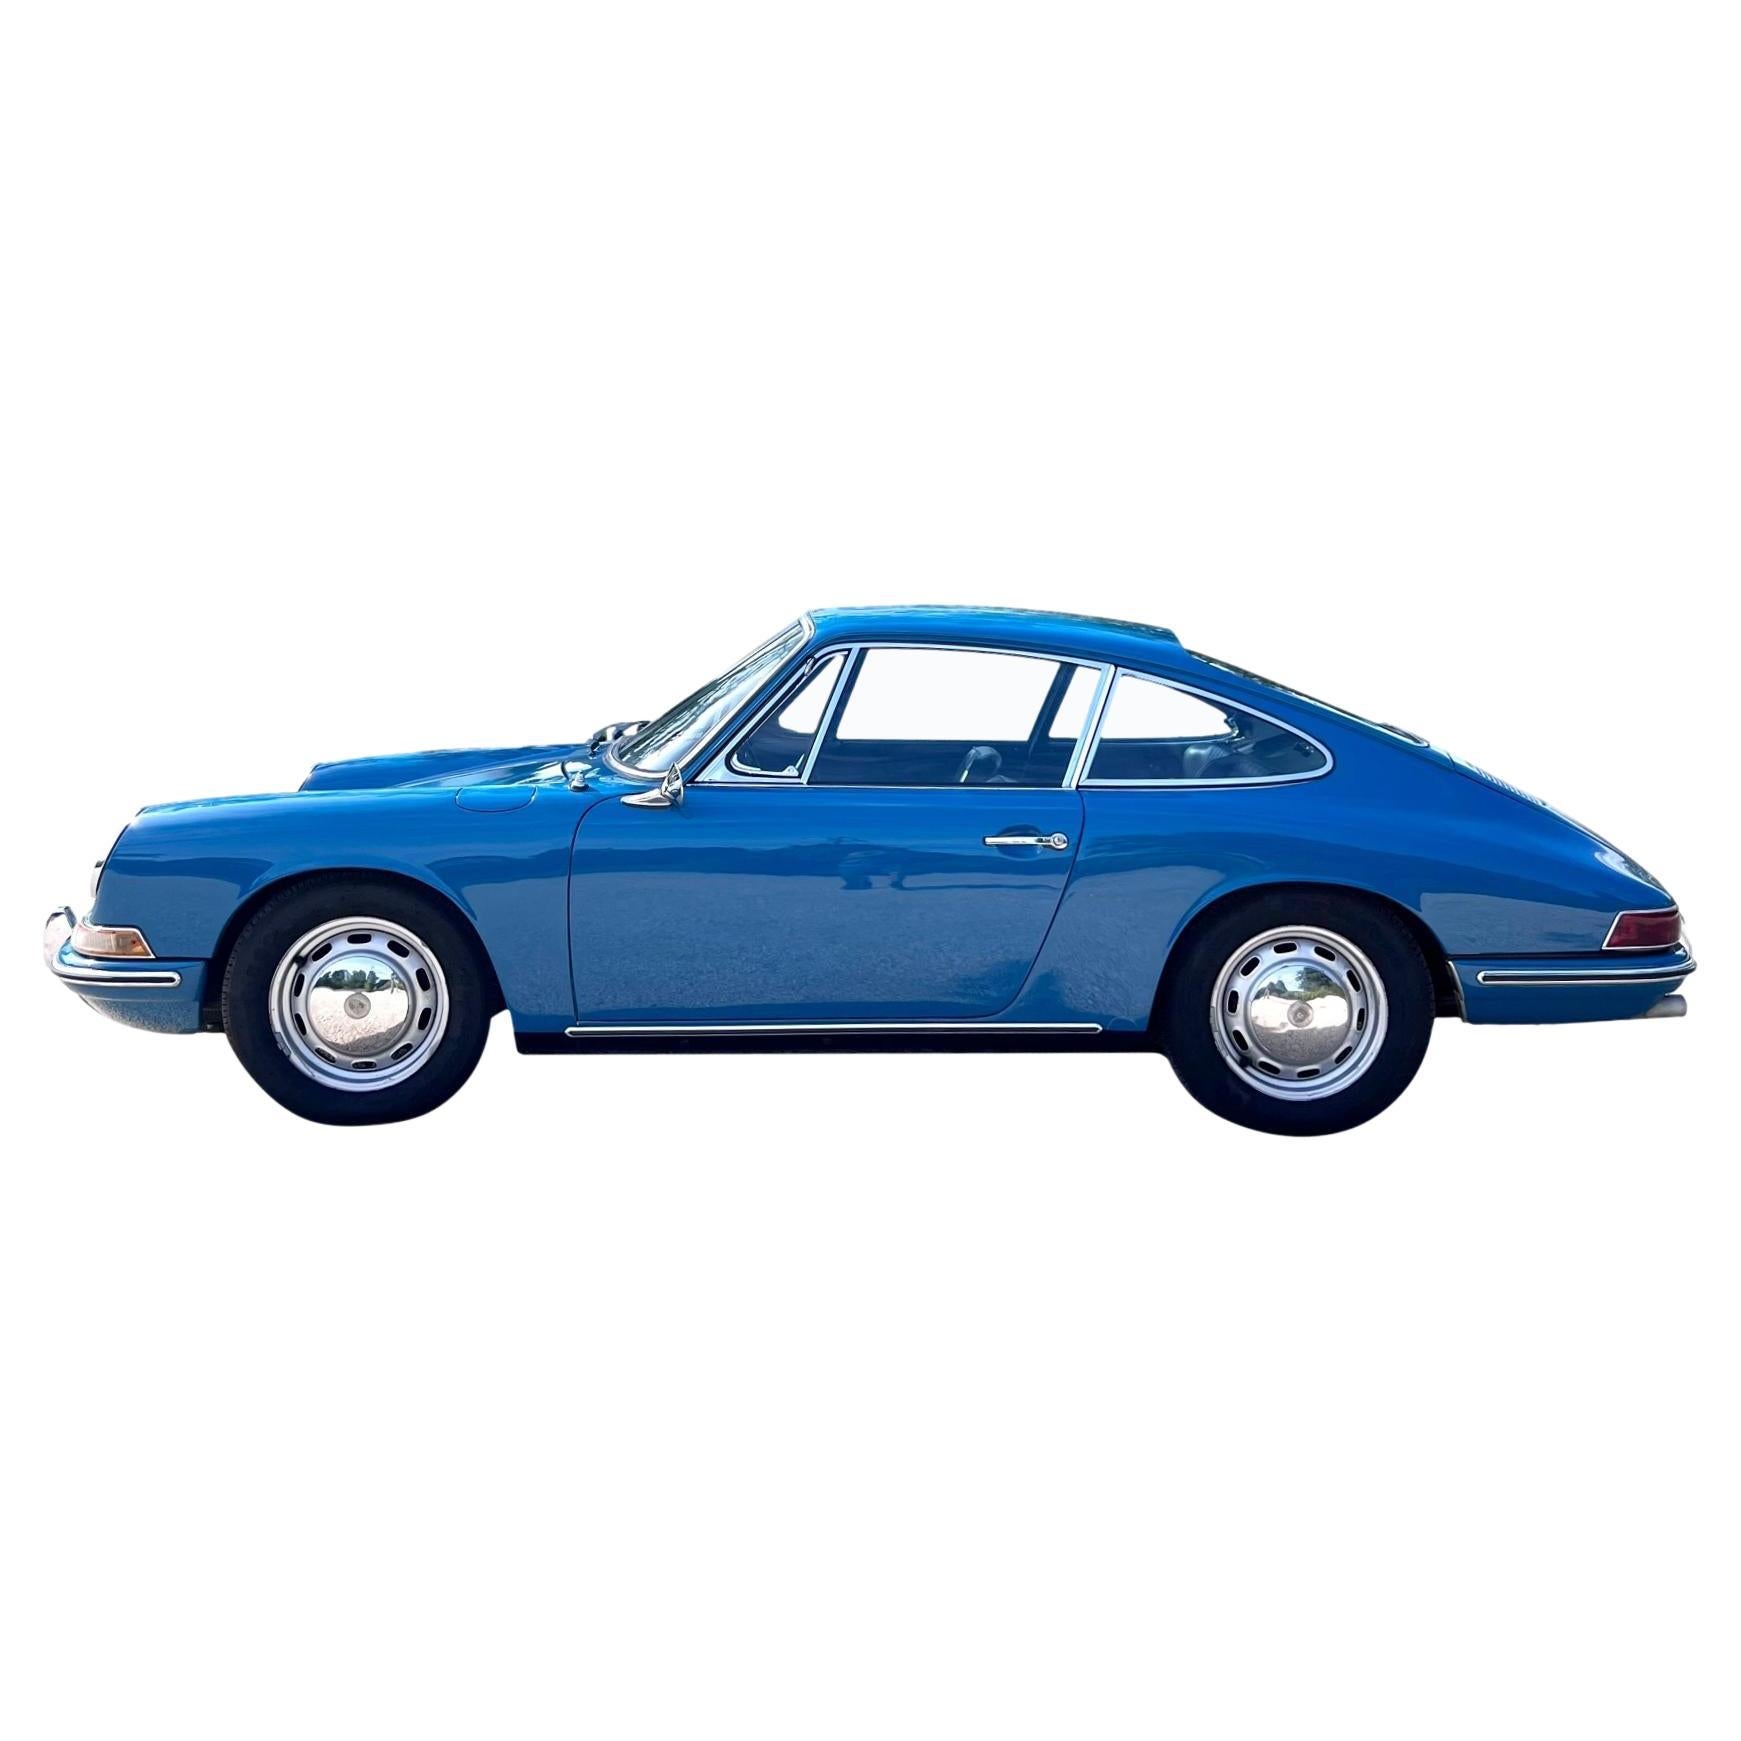 Porsche 912 à 5 vitesses bleu agate, 1967